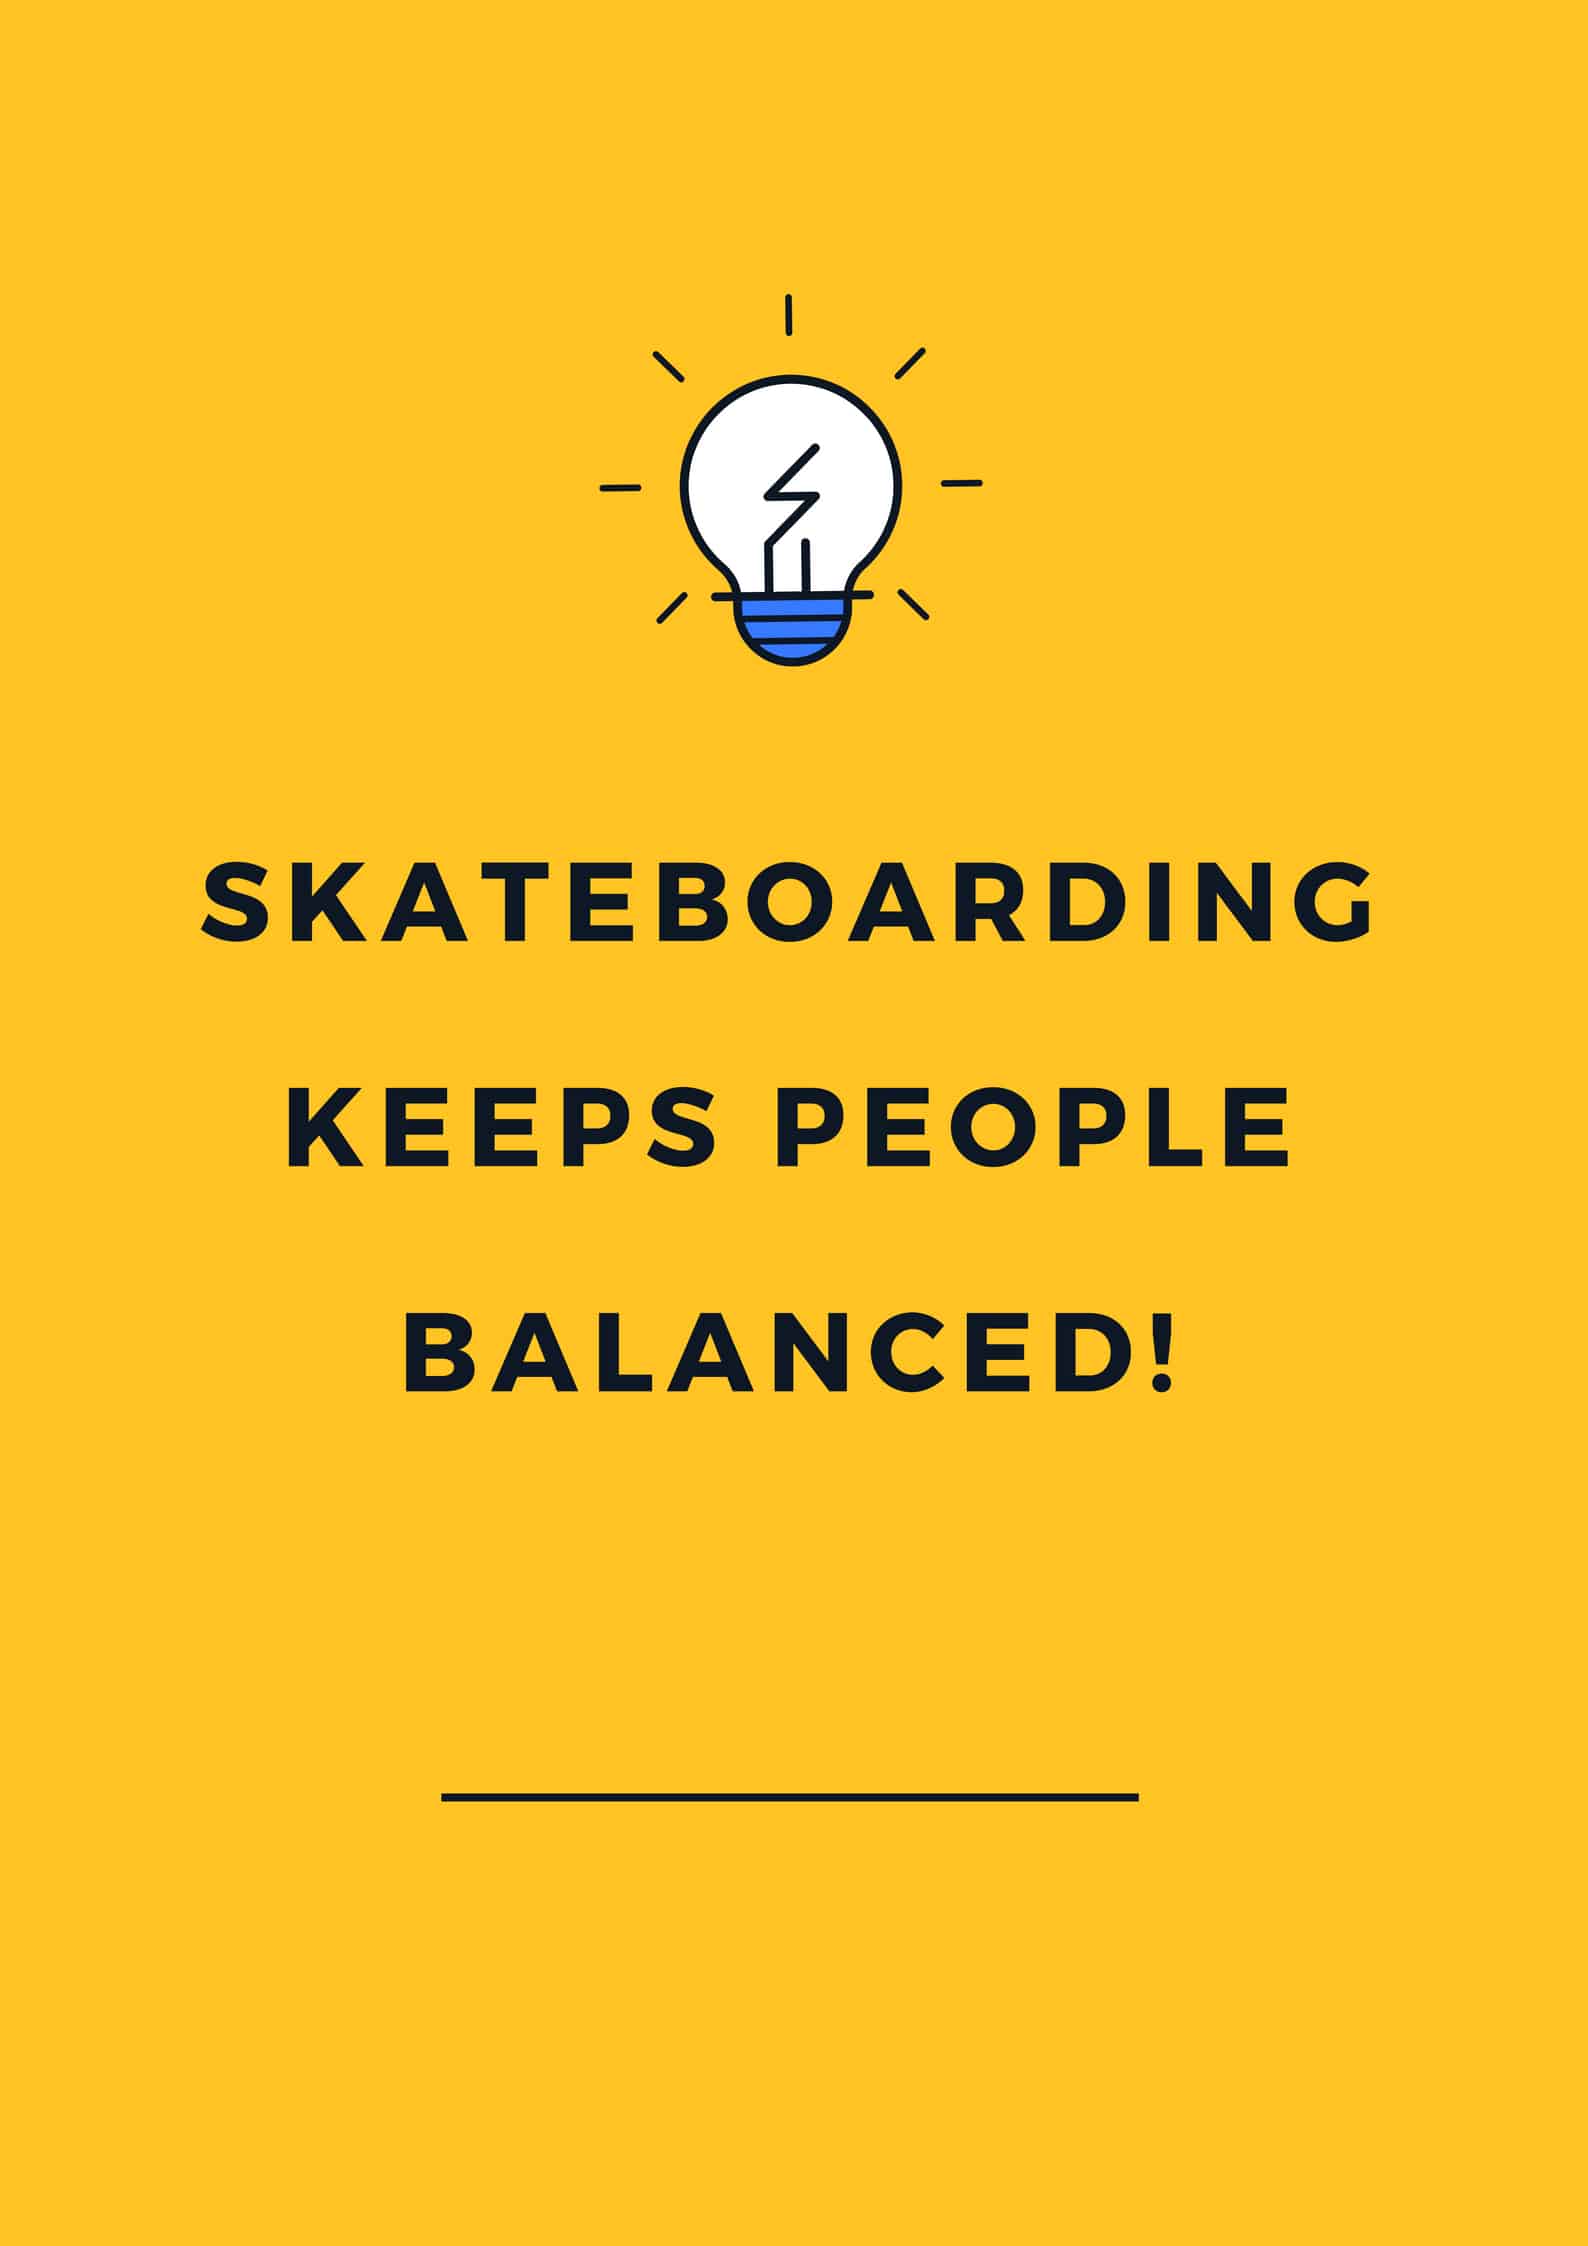 Skateboarding keeps people balanced!